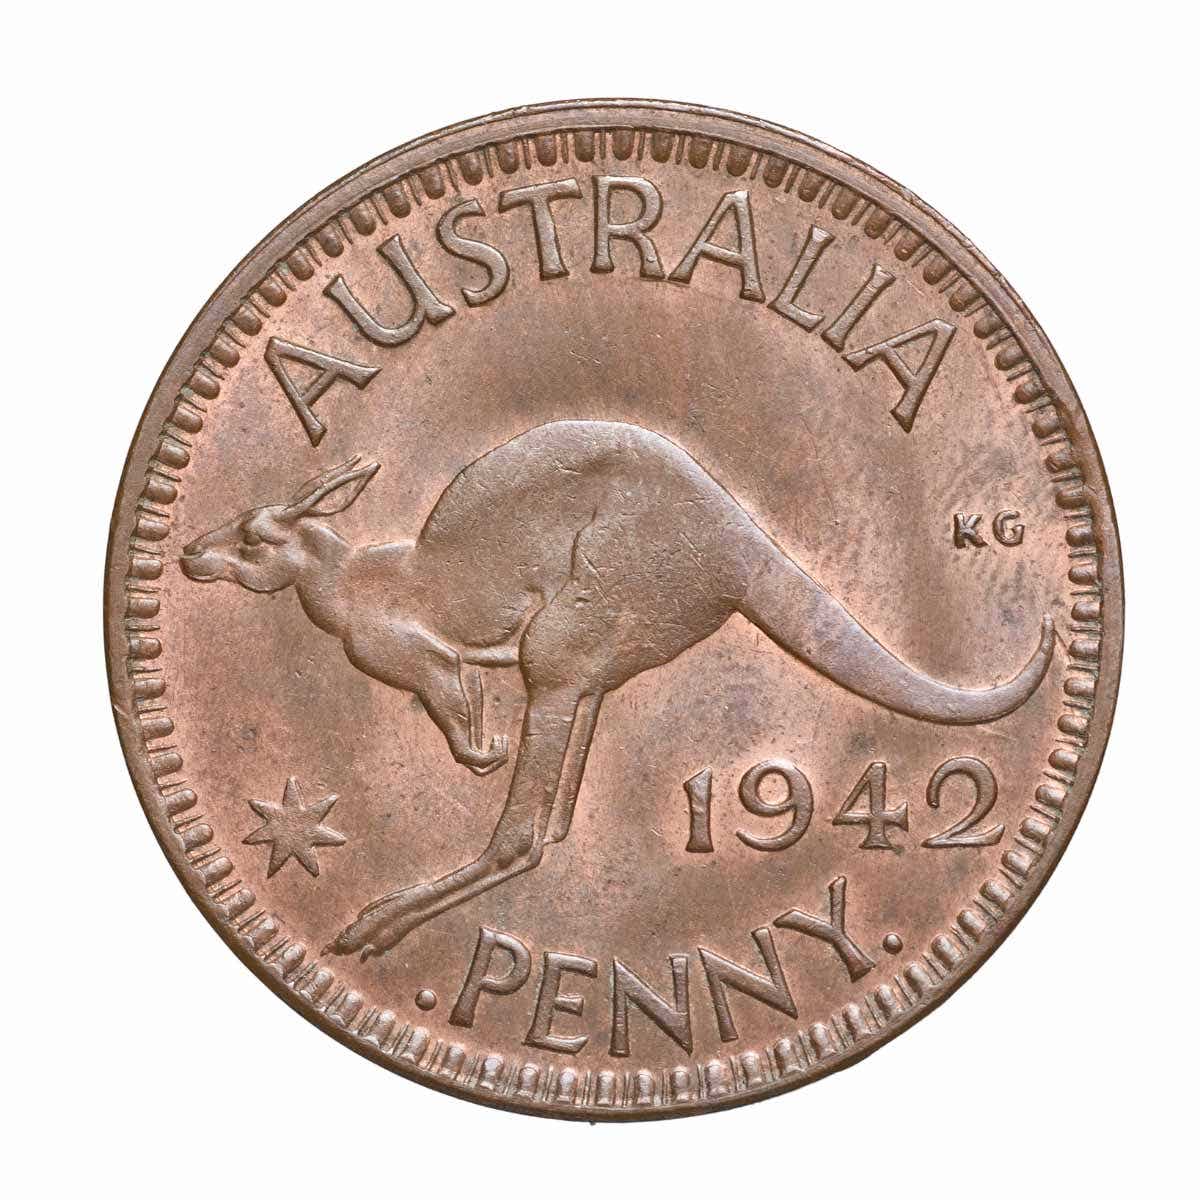 1942I Penny Uncirculated